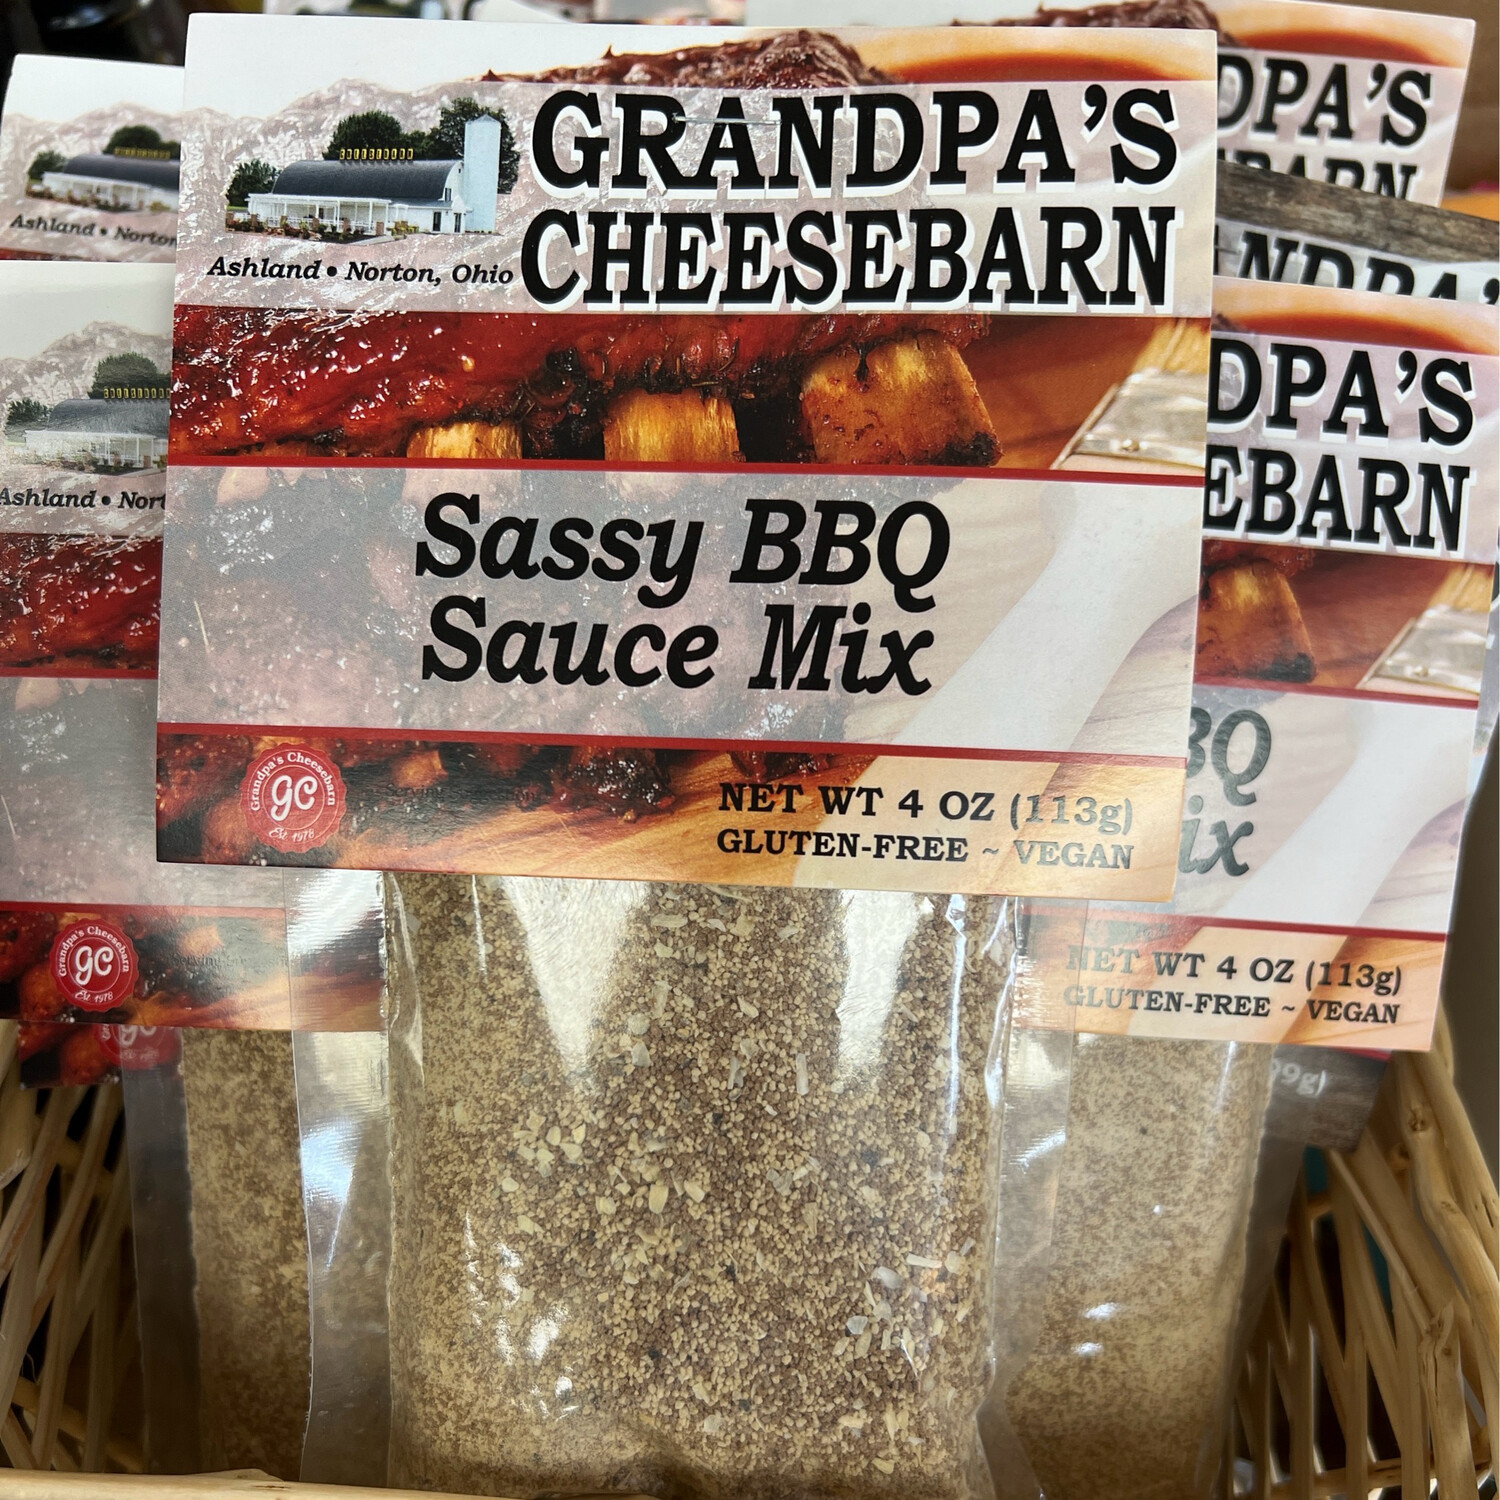 Sassy BBQ Sauce Mix